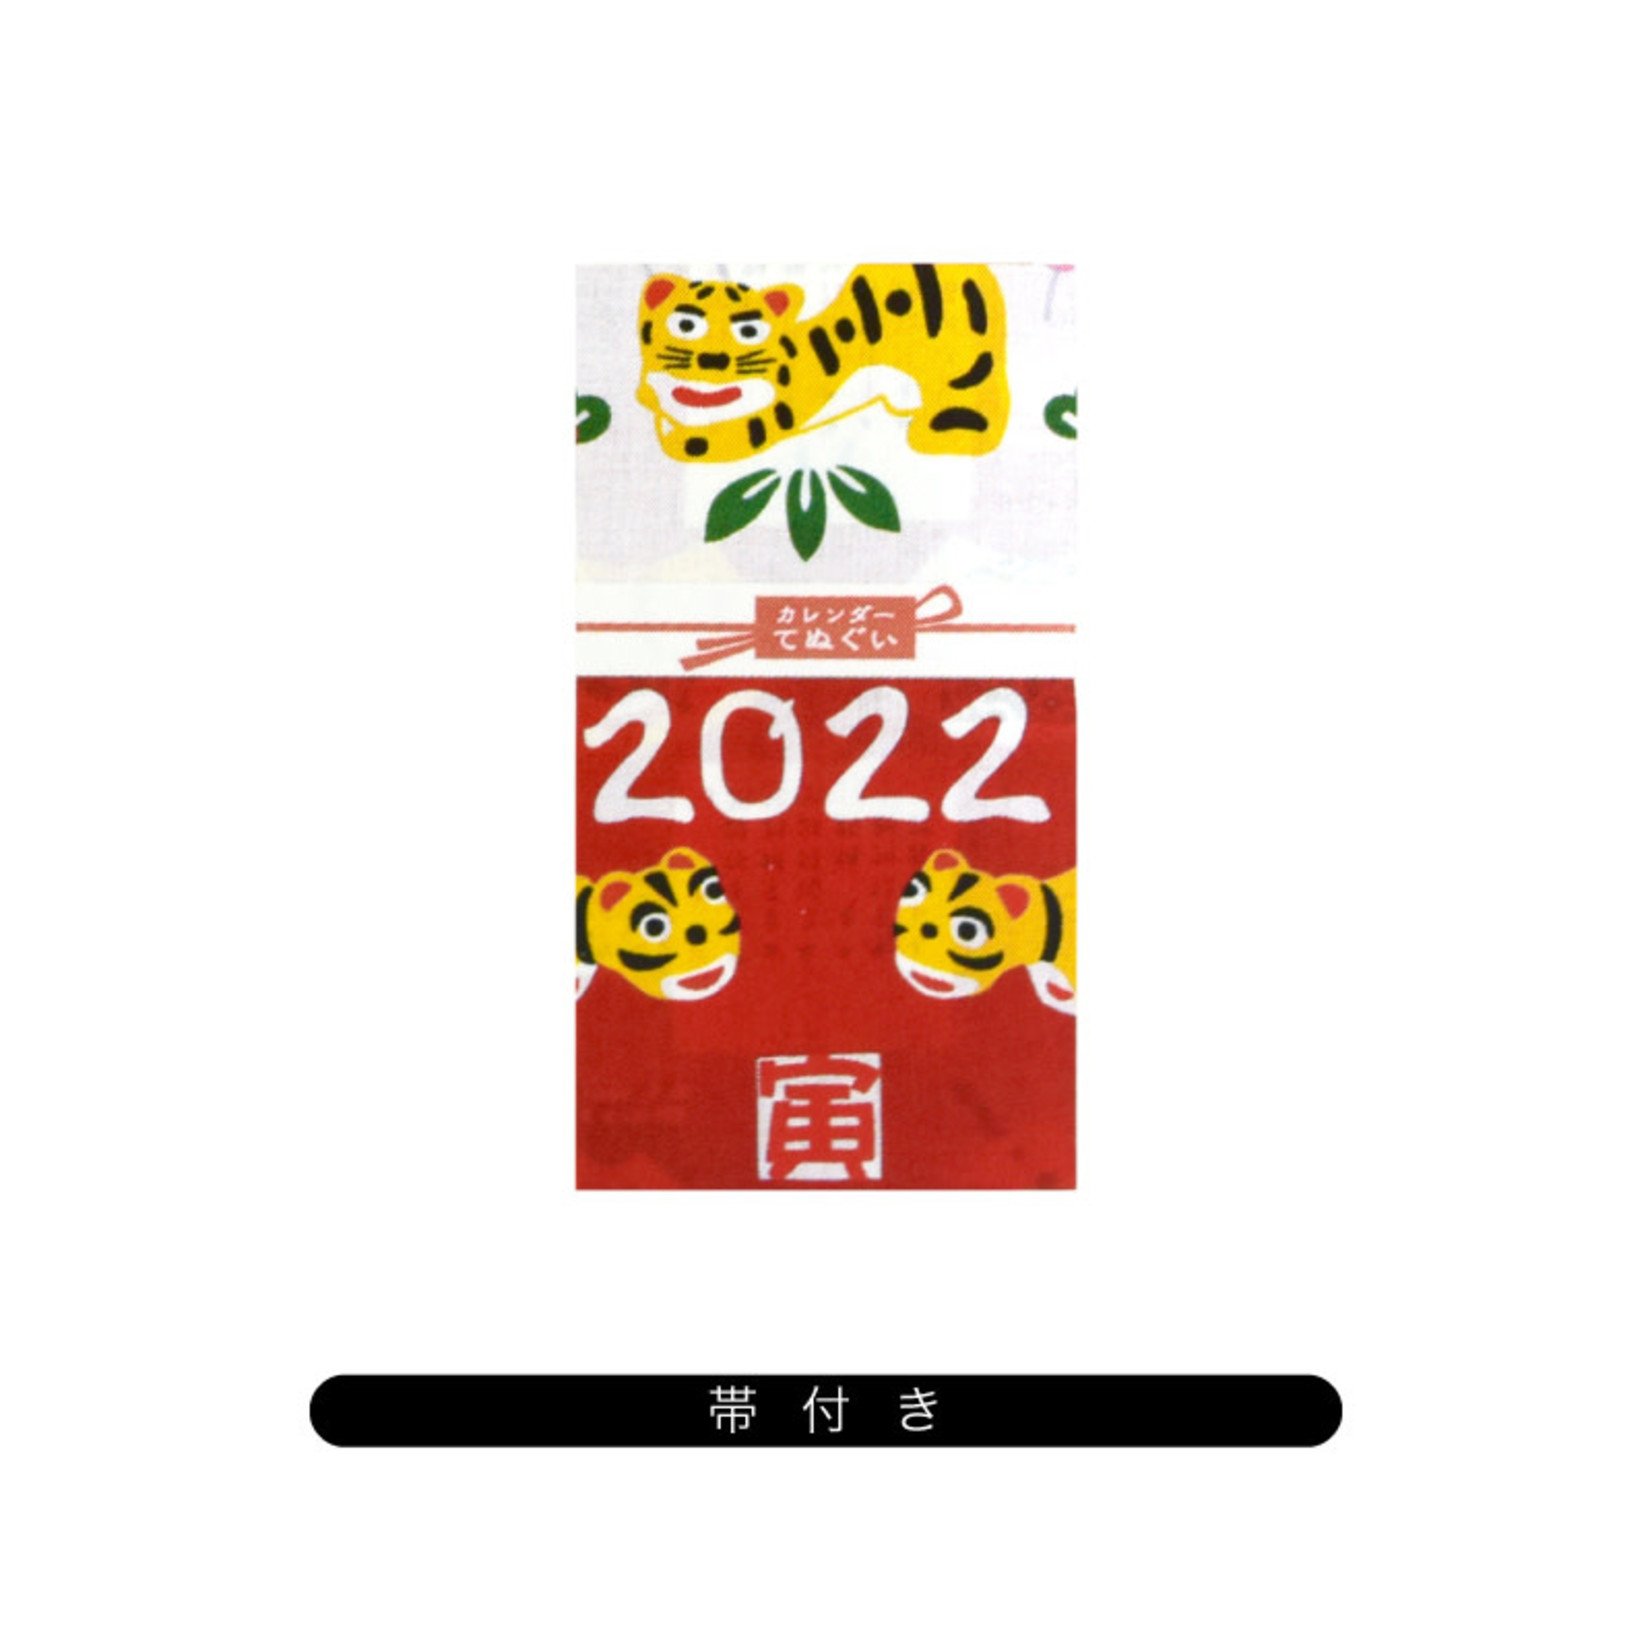 2022 Invitation Zodiac Tiger - Tenugui calendar  in RED - W4-17502